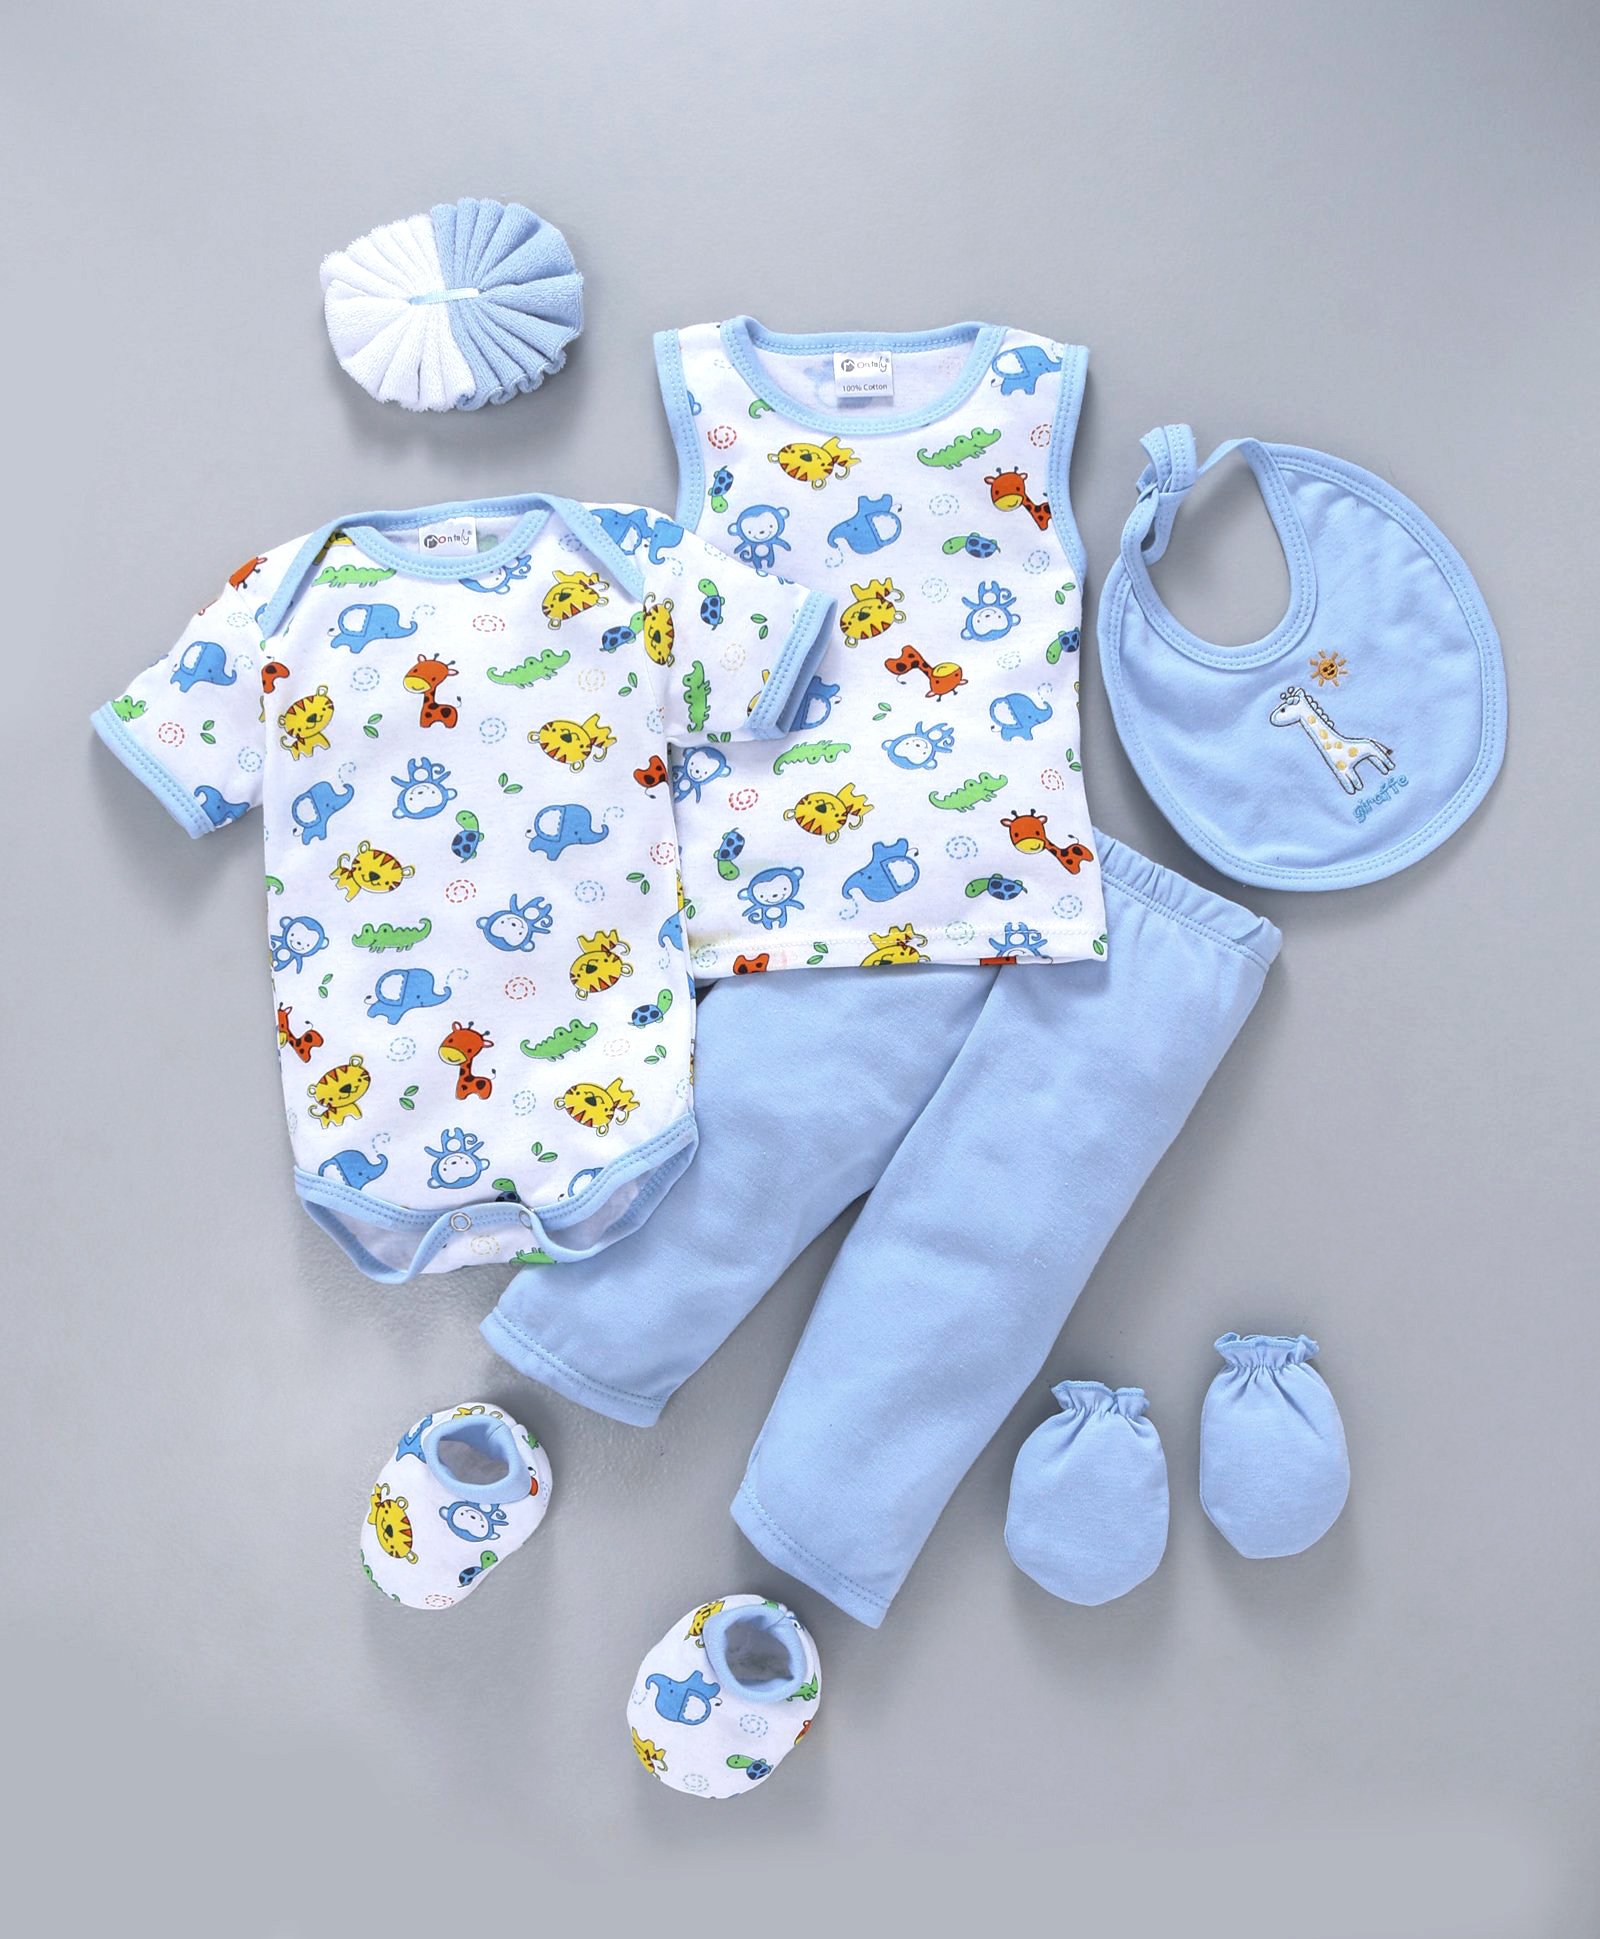 Montaly Baby Clothing Gift Set Animal 